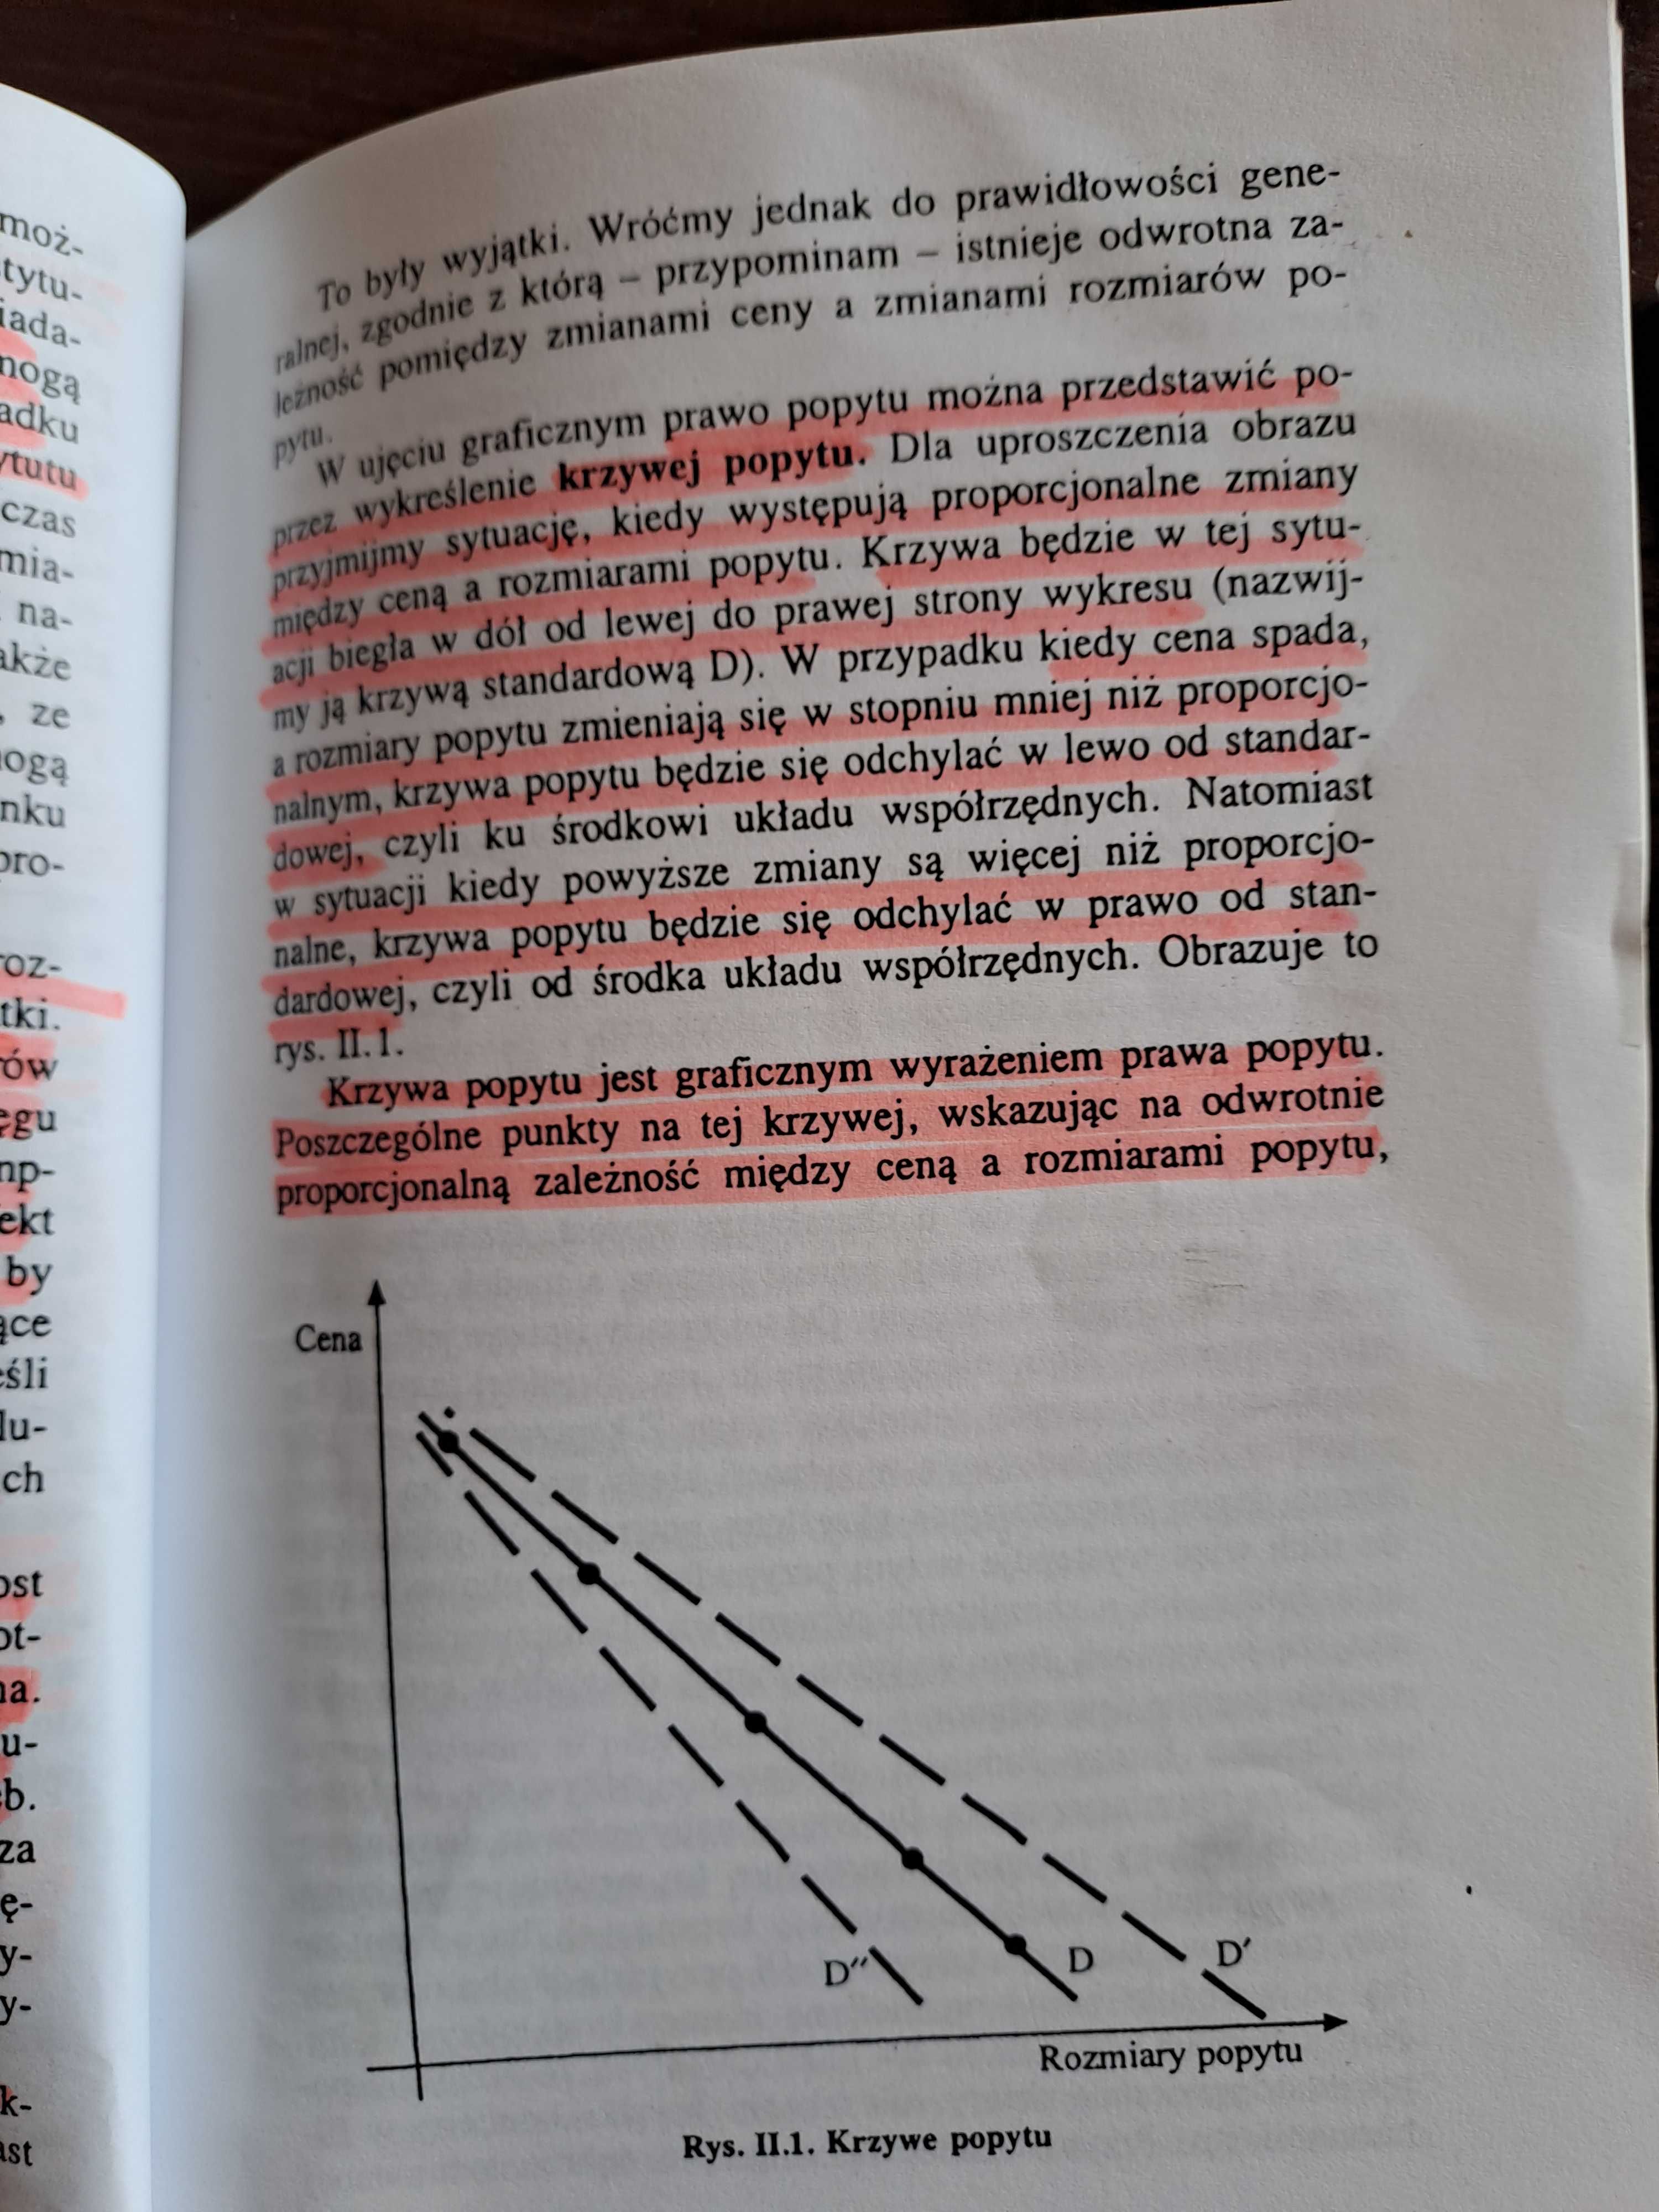 M. Gulcz - "Ekonomia" - tom I i II (Mikro i makroekonomia)